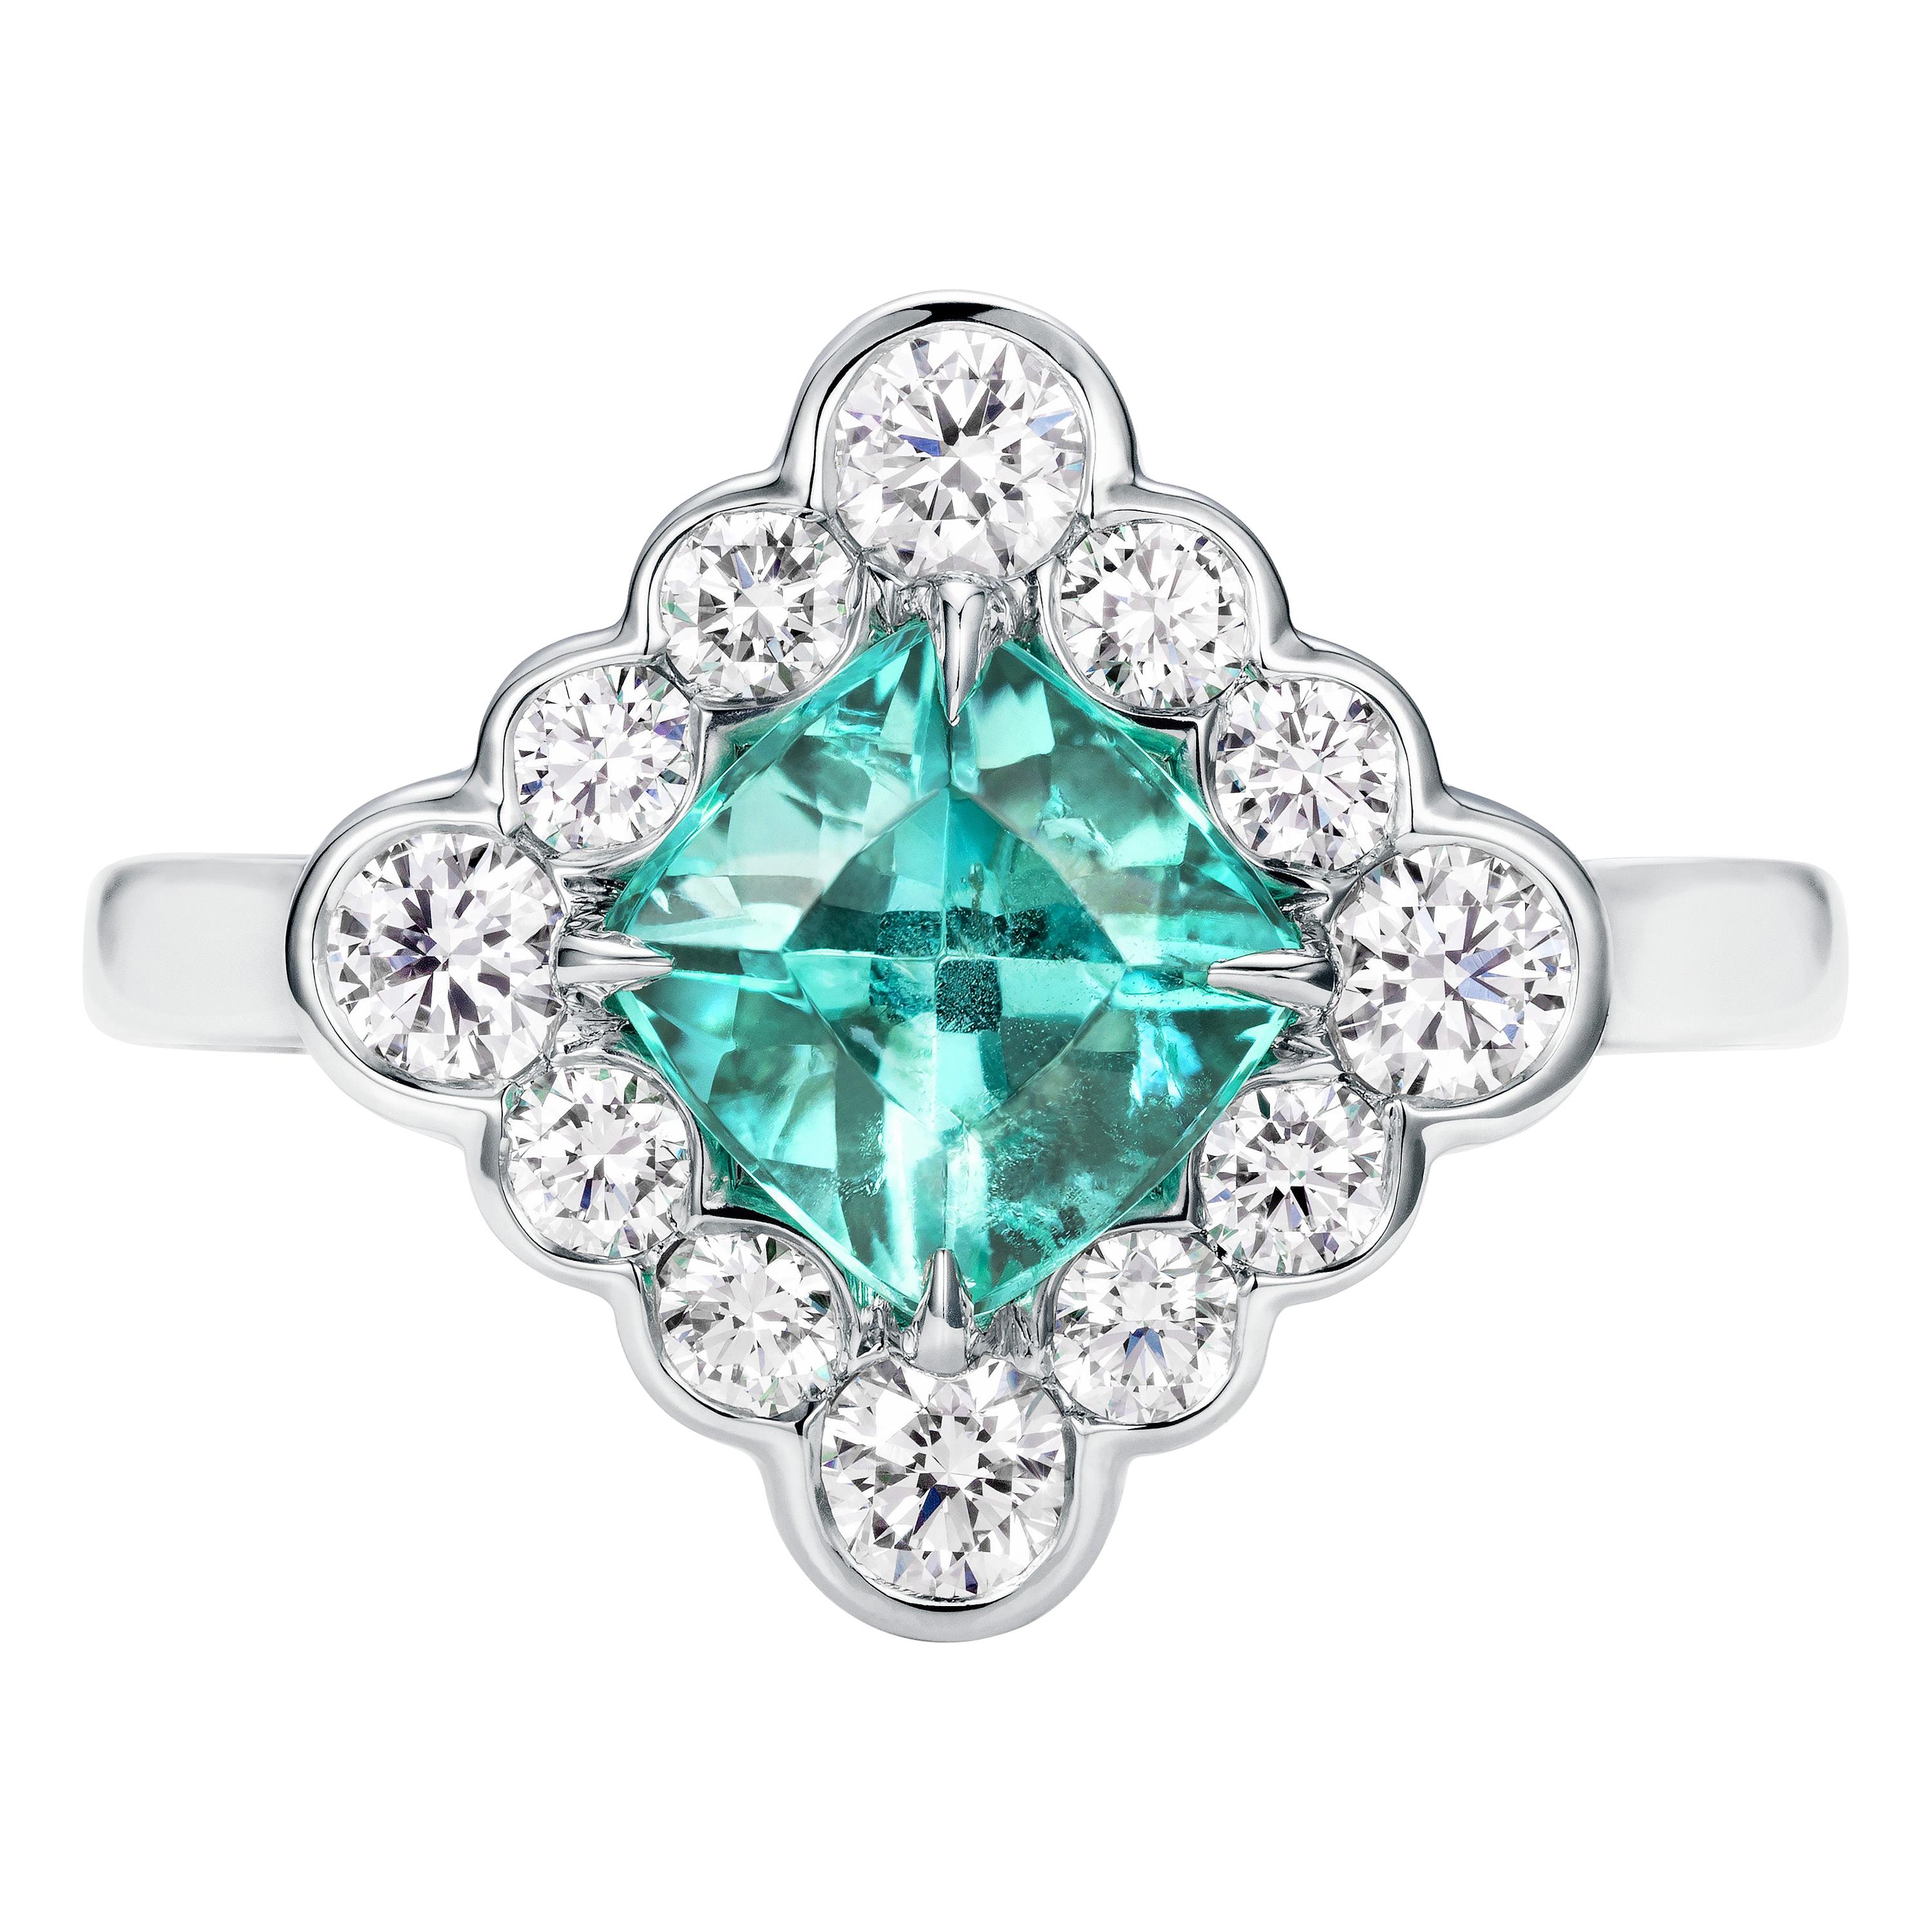 Marcel Salloum 1.05 Carat Paraiba Tourmaline Diamond Engagement Ring in Platinum For Sale